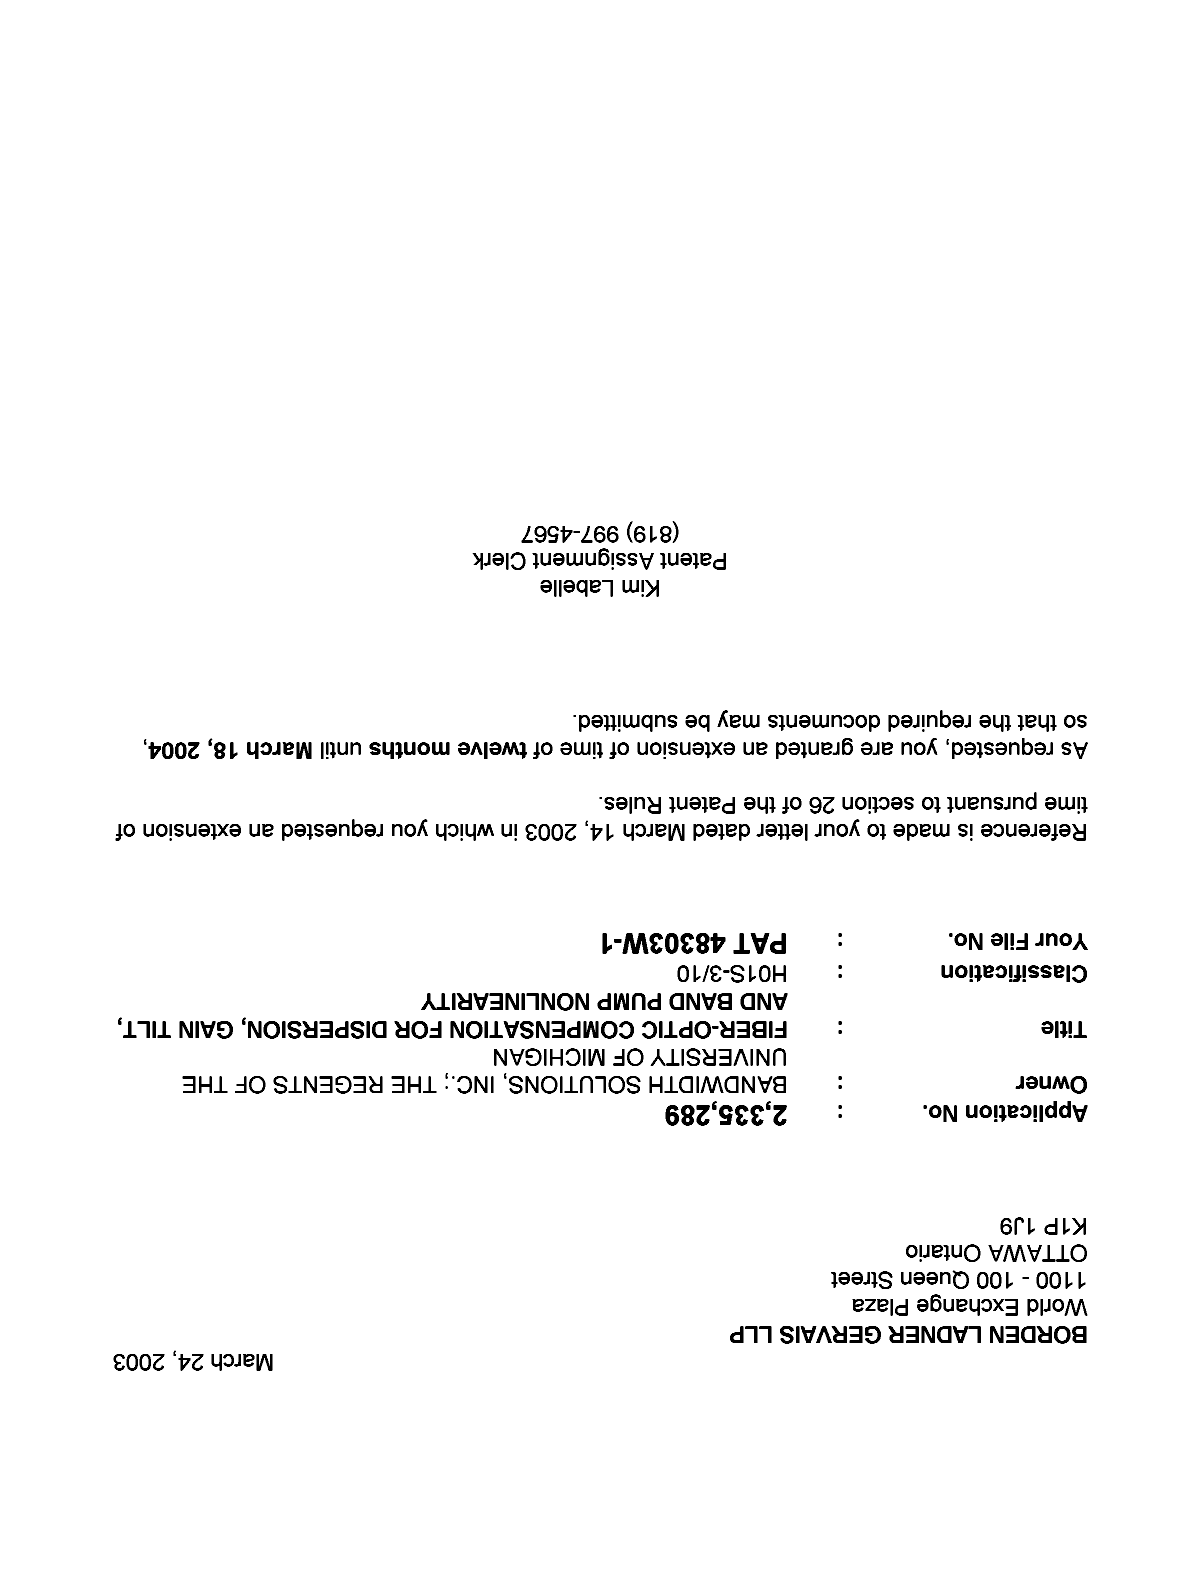 Canadian Patent Document 2335289. Correspondence 20021224. Image 1 of 1